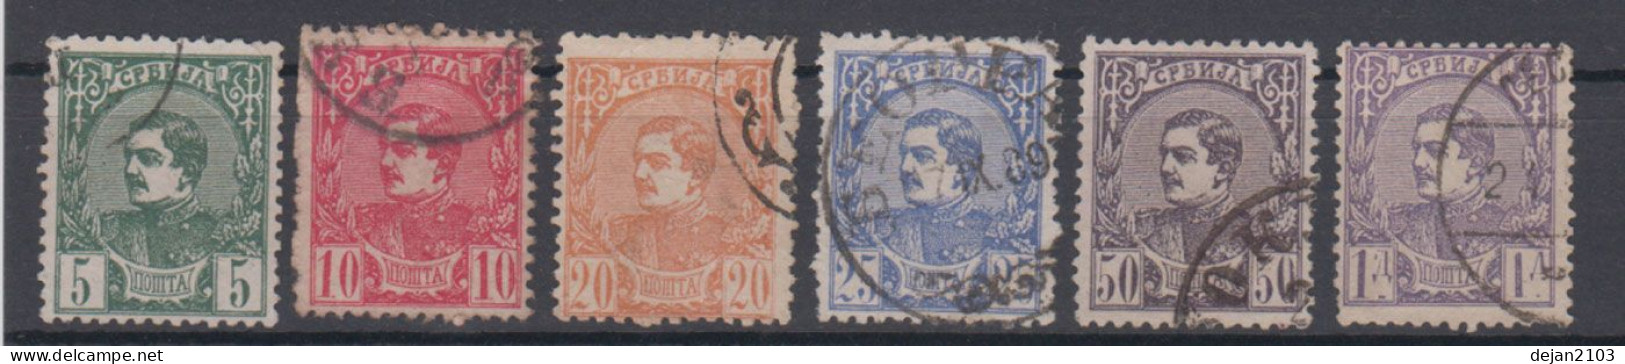 Serbia Duke Milan Mi#22/27 1880 USED - Serbia